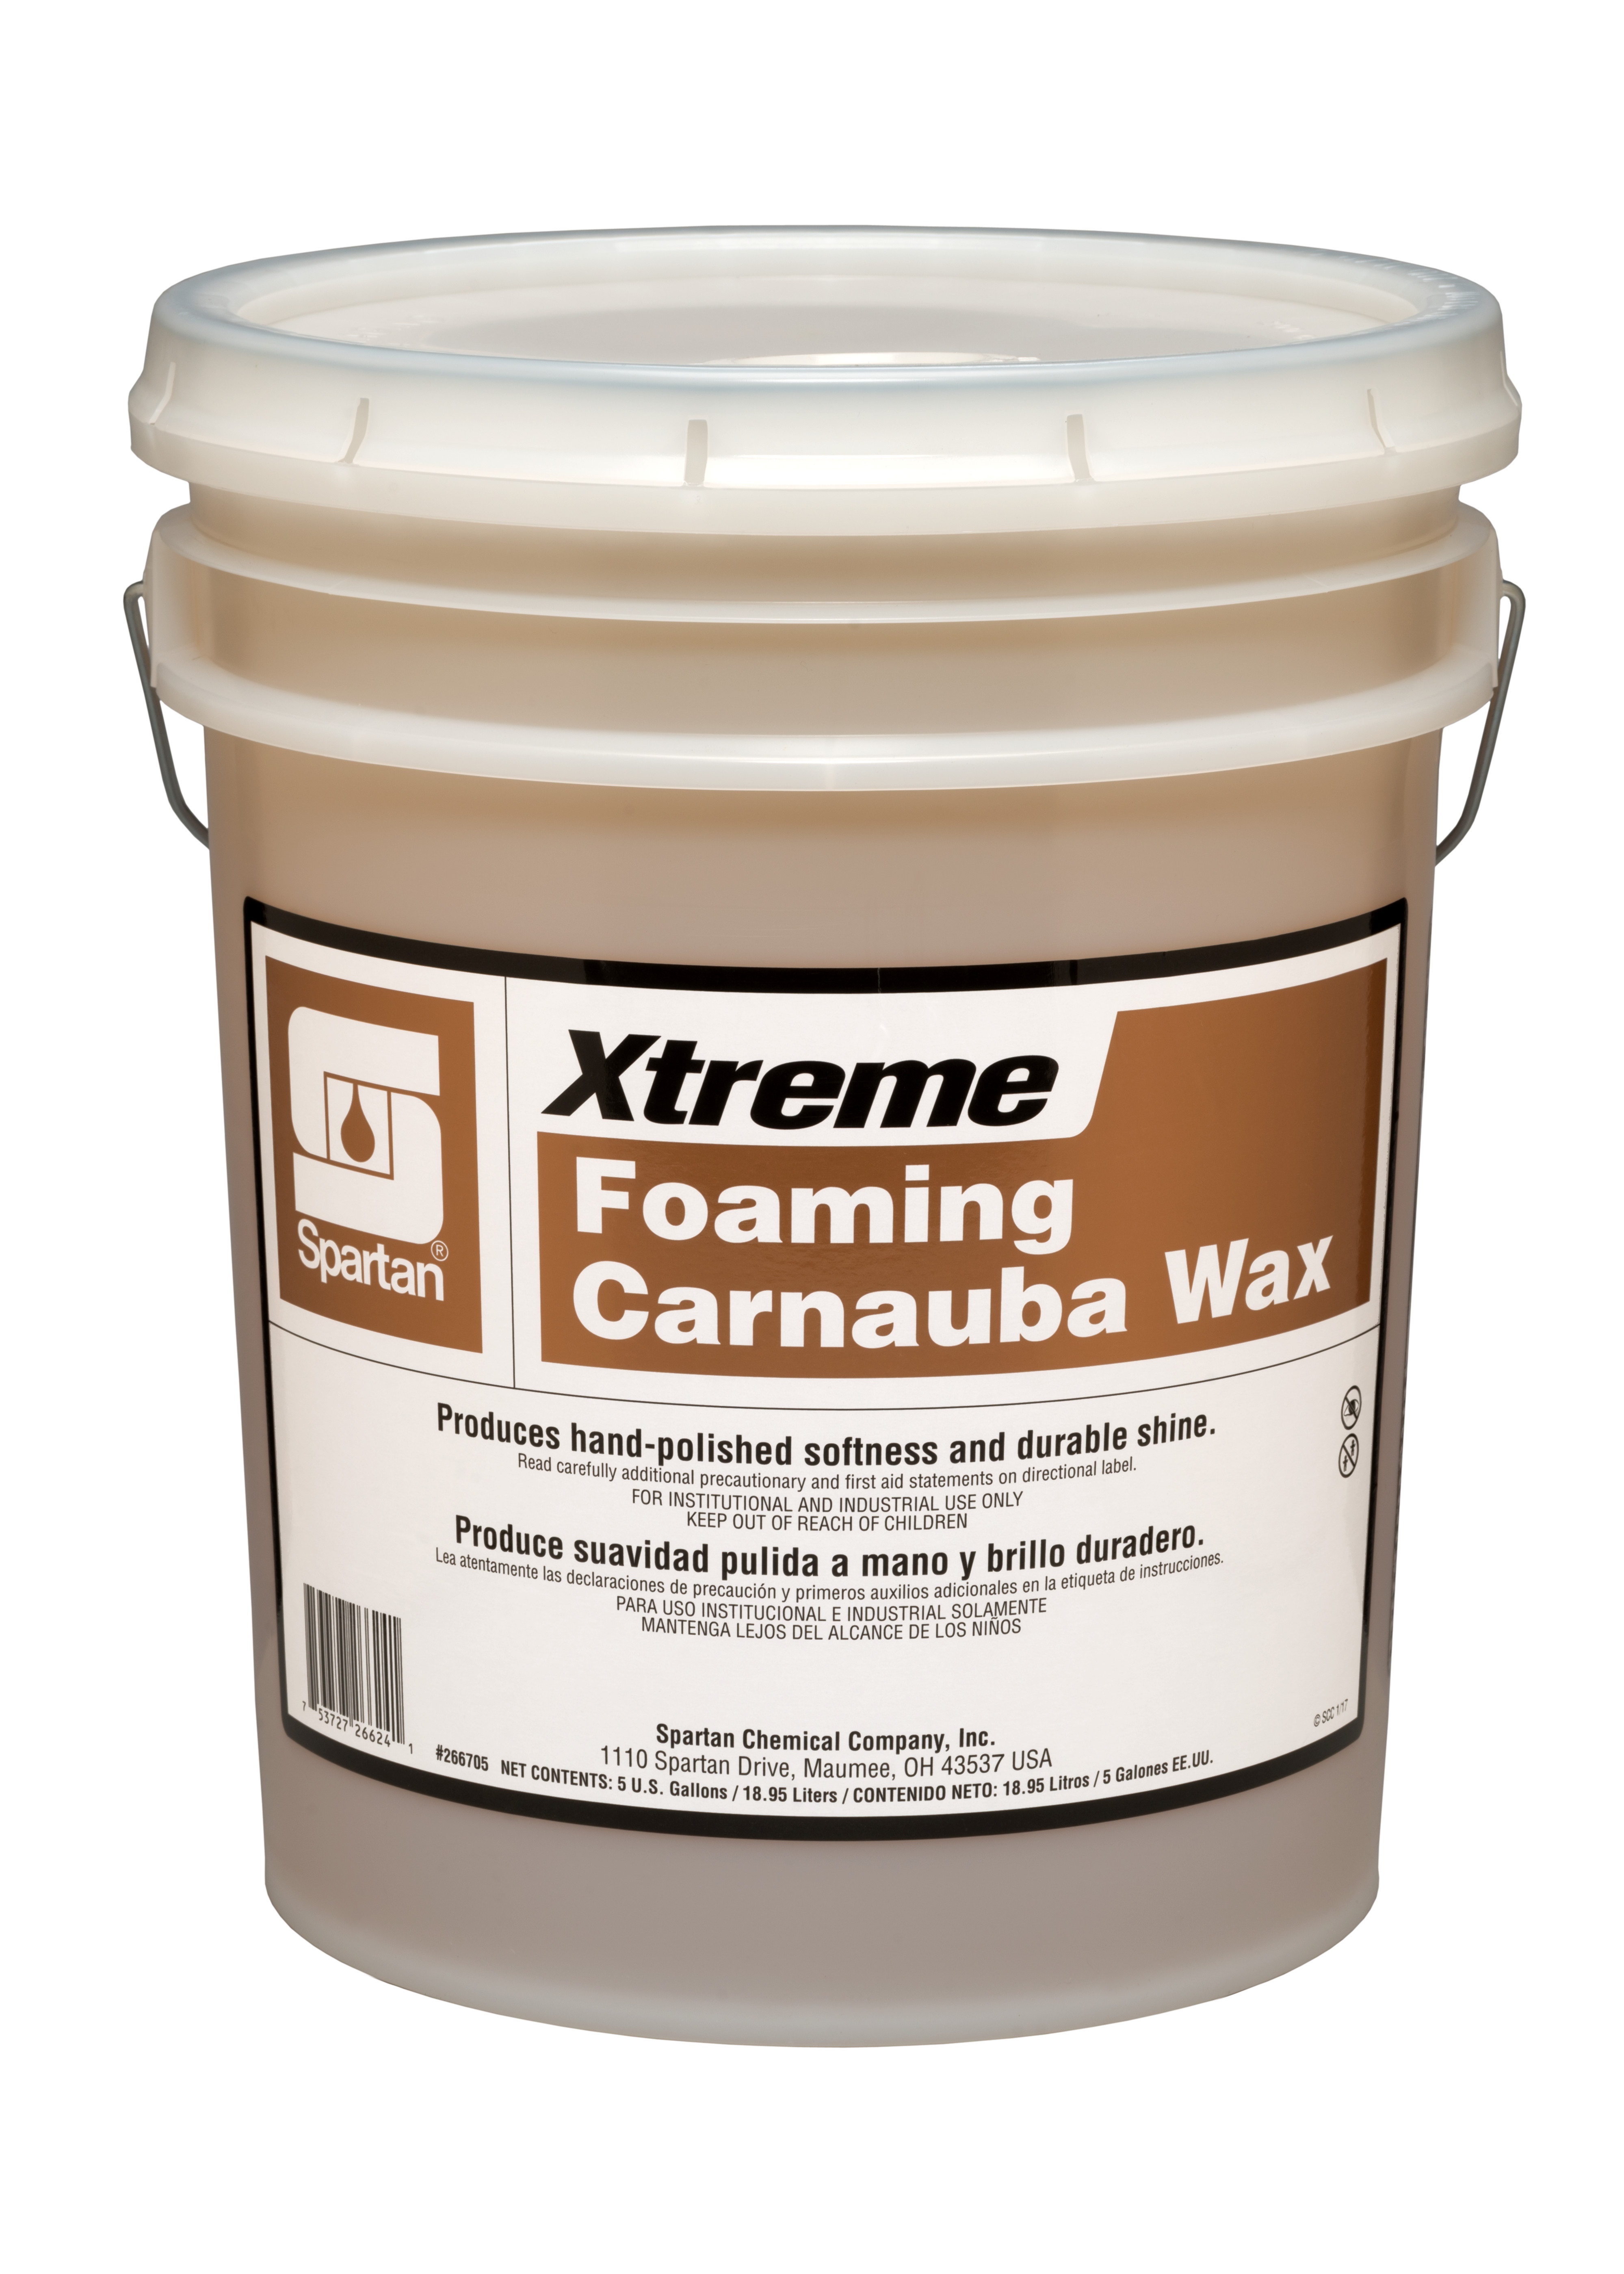 Spartan Chemical Company Xtreme Foaming Carnauba Wax, 5 GAL PAIL